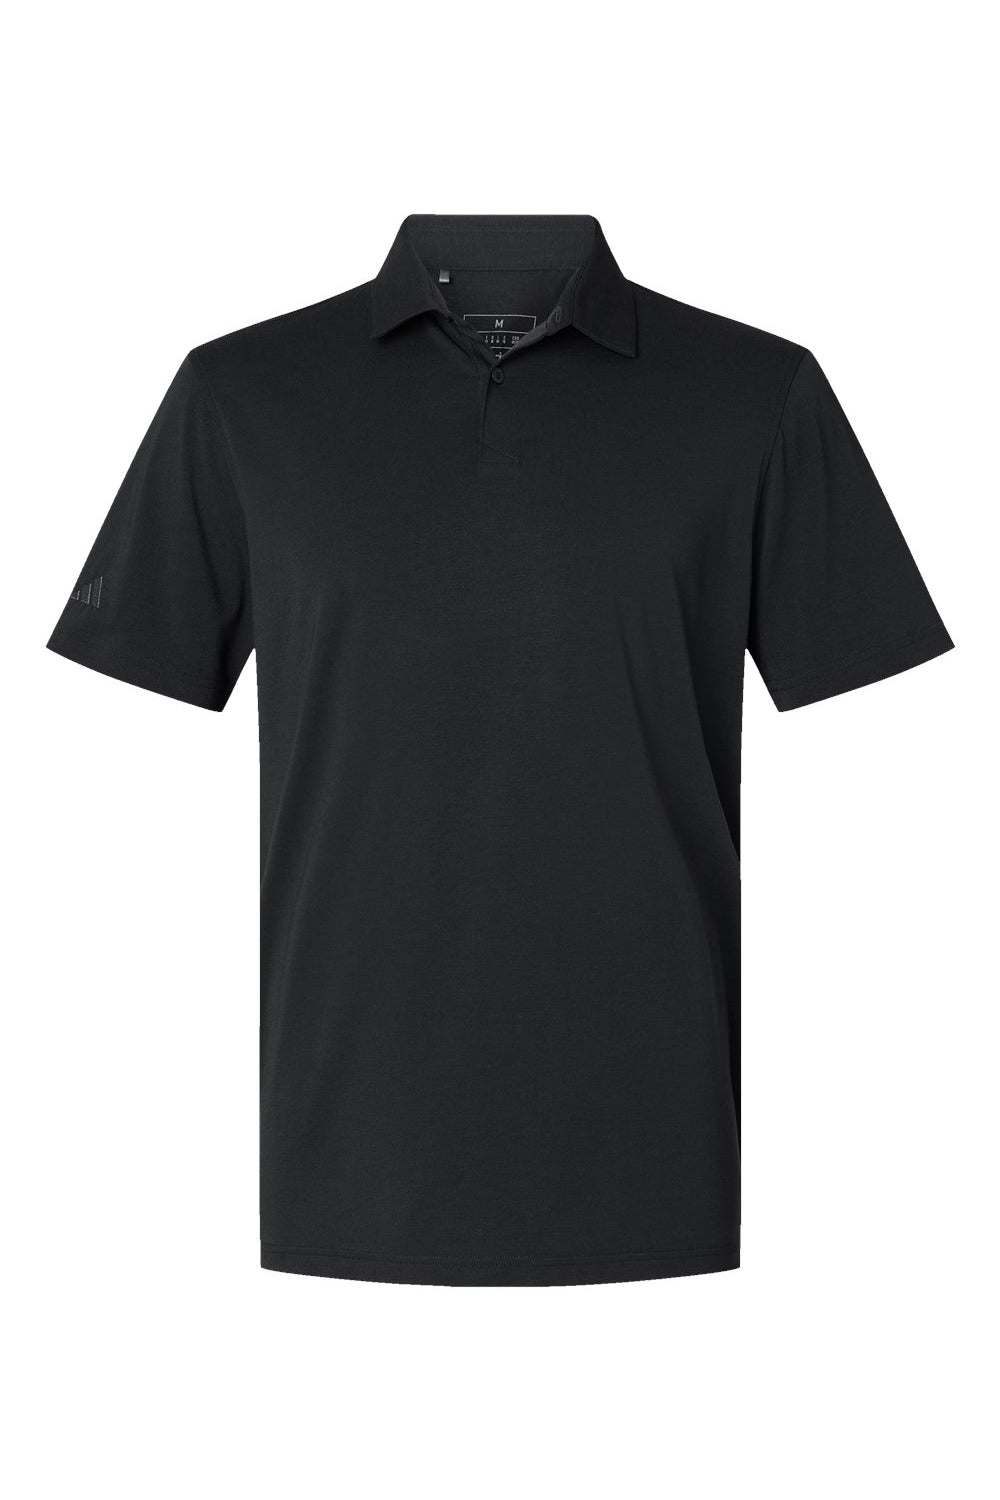 Adidas A590 Mens Short Sleeve Polo Shirt Black Flat Front